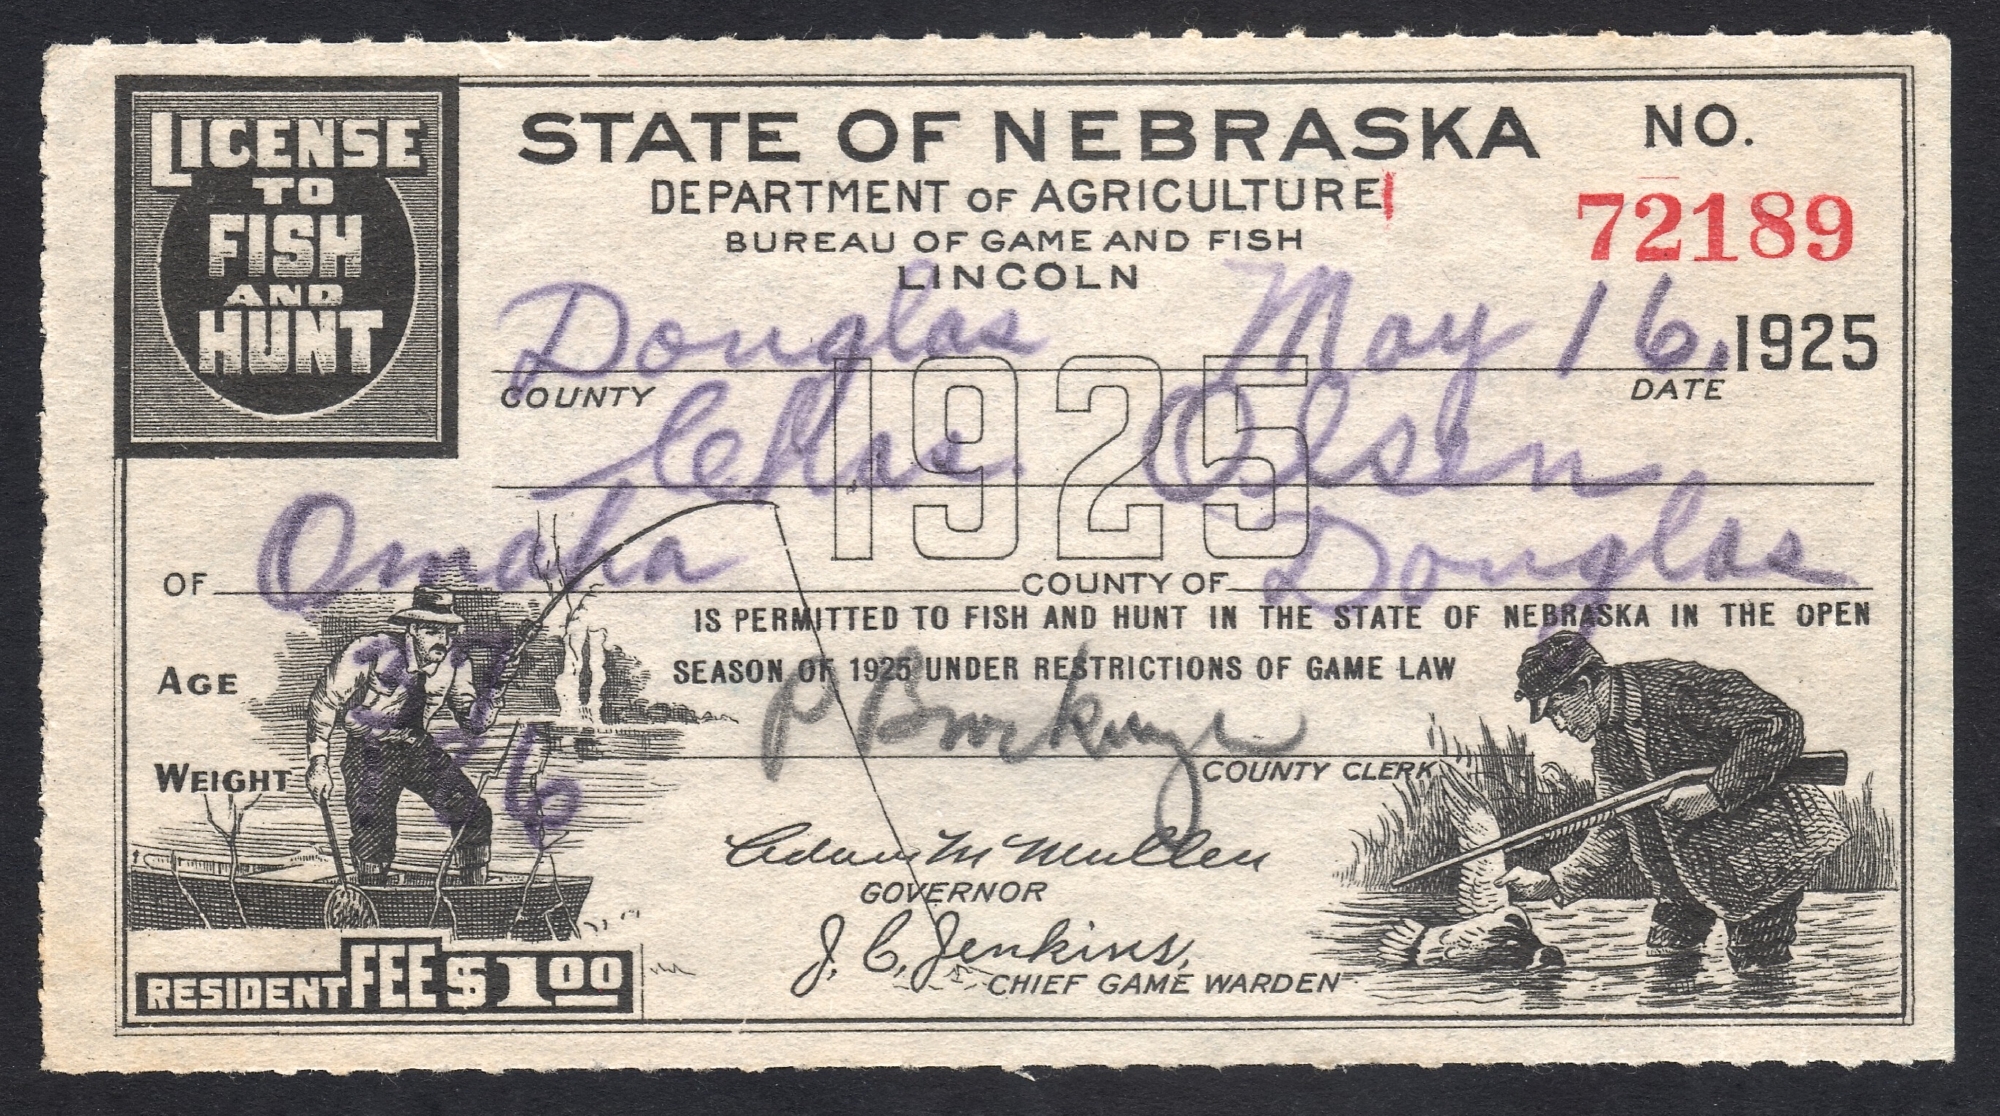 Nebraska 1925 License to Fish and Hunt